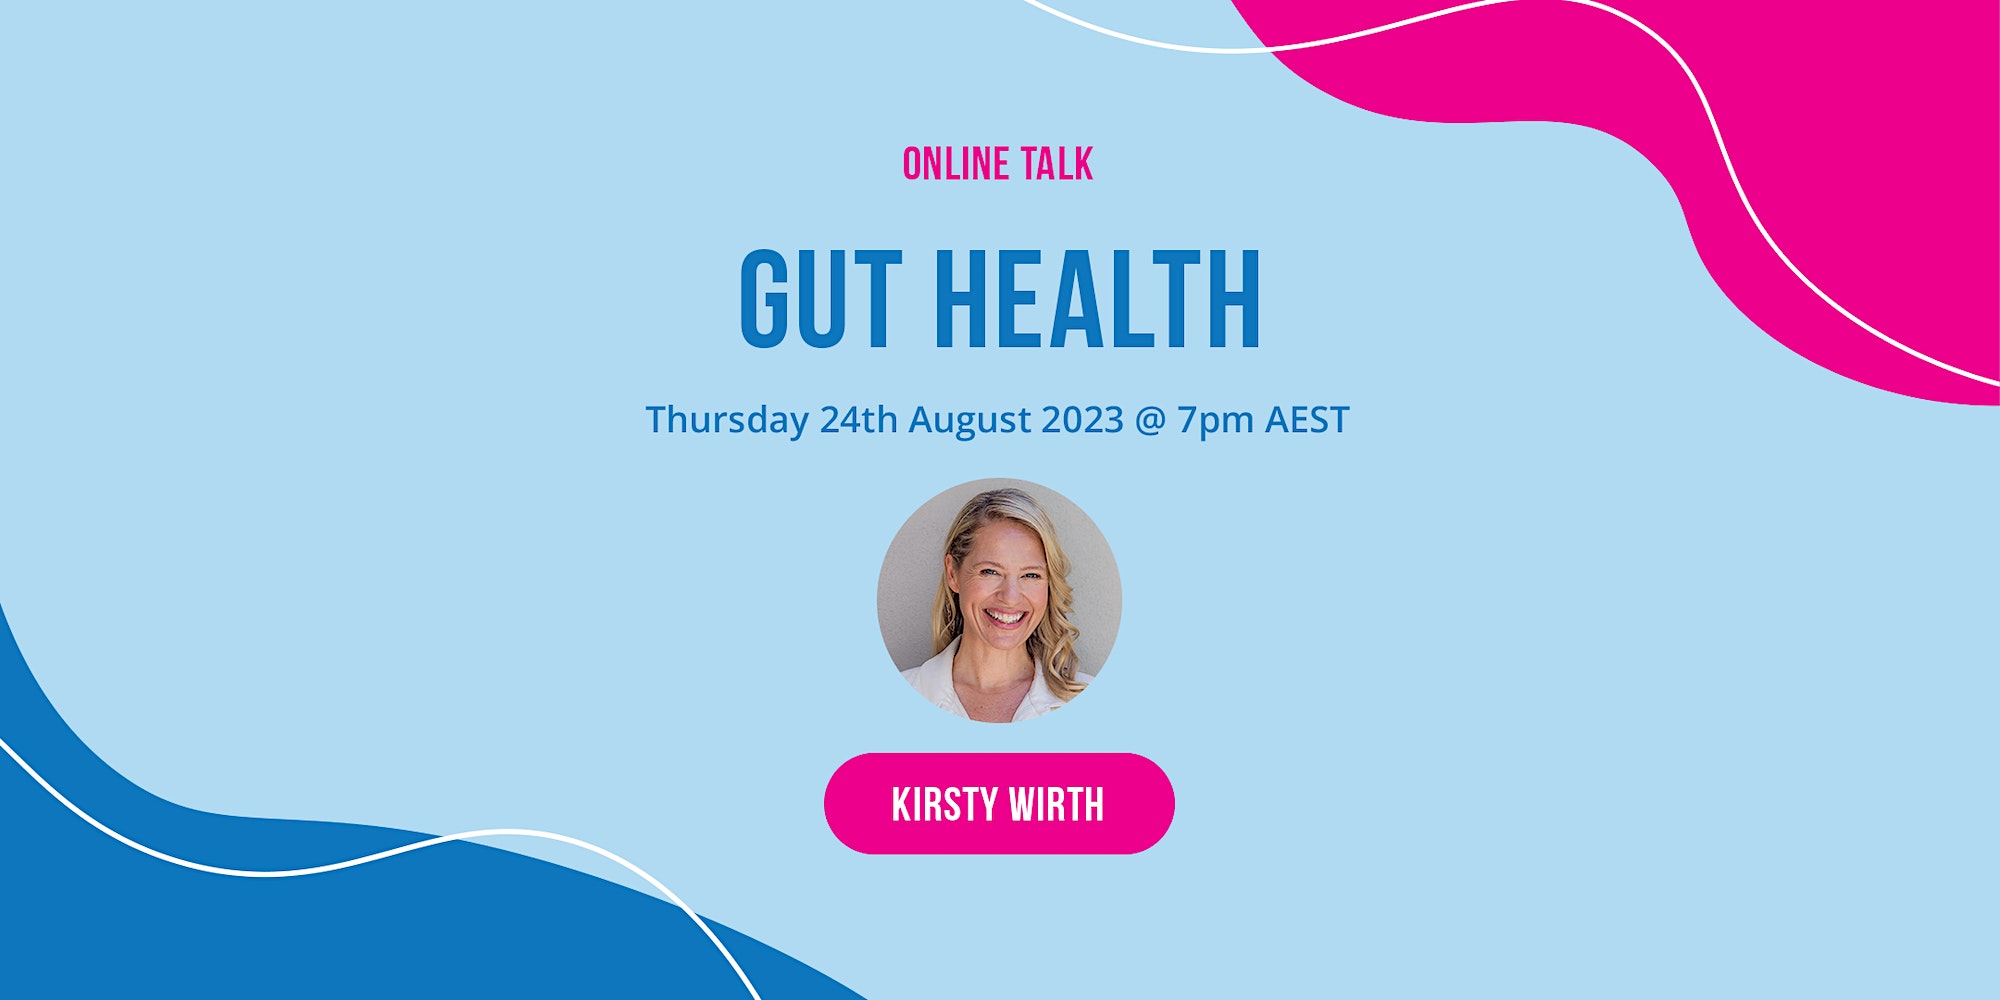 Online Talk Gut Health August 24, 2023 Thursday 7PM AEST